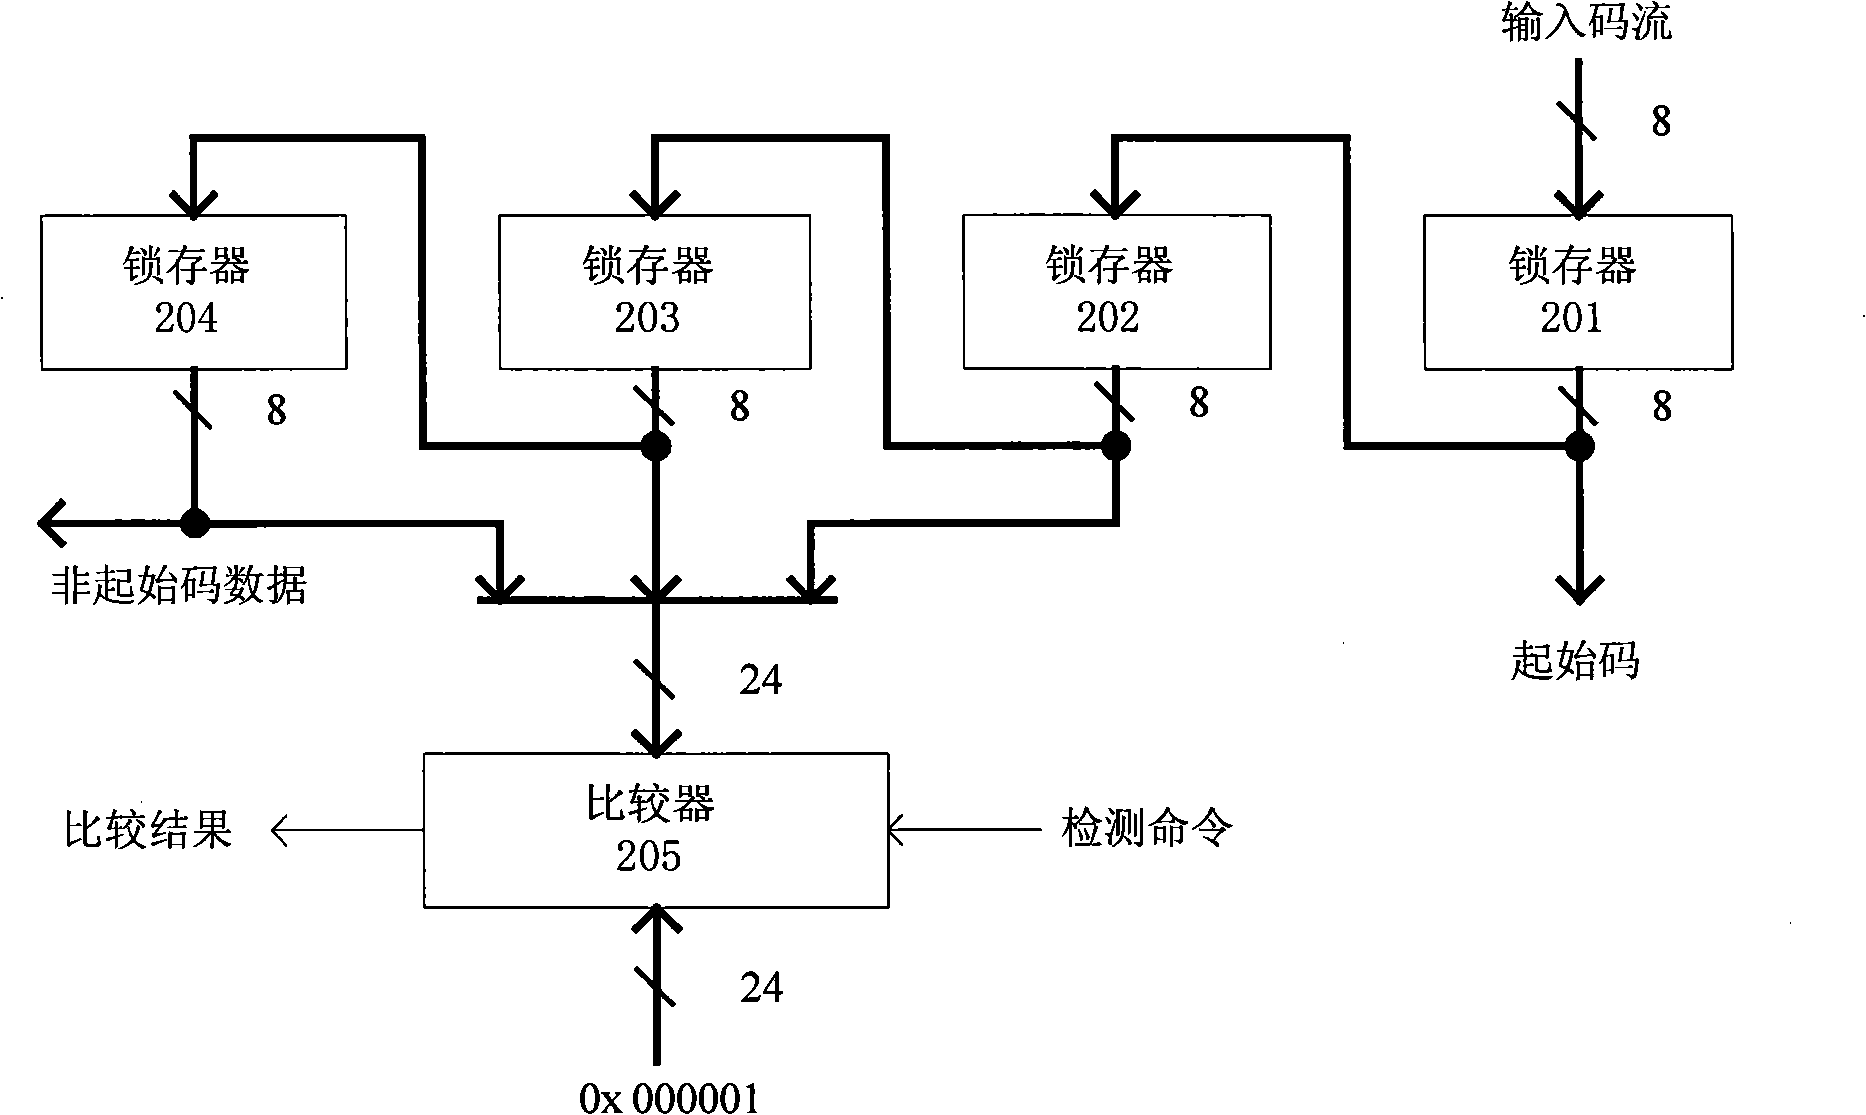 Filler discarding circuit and method